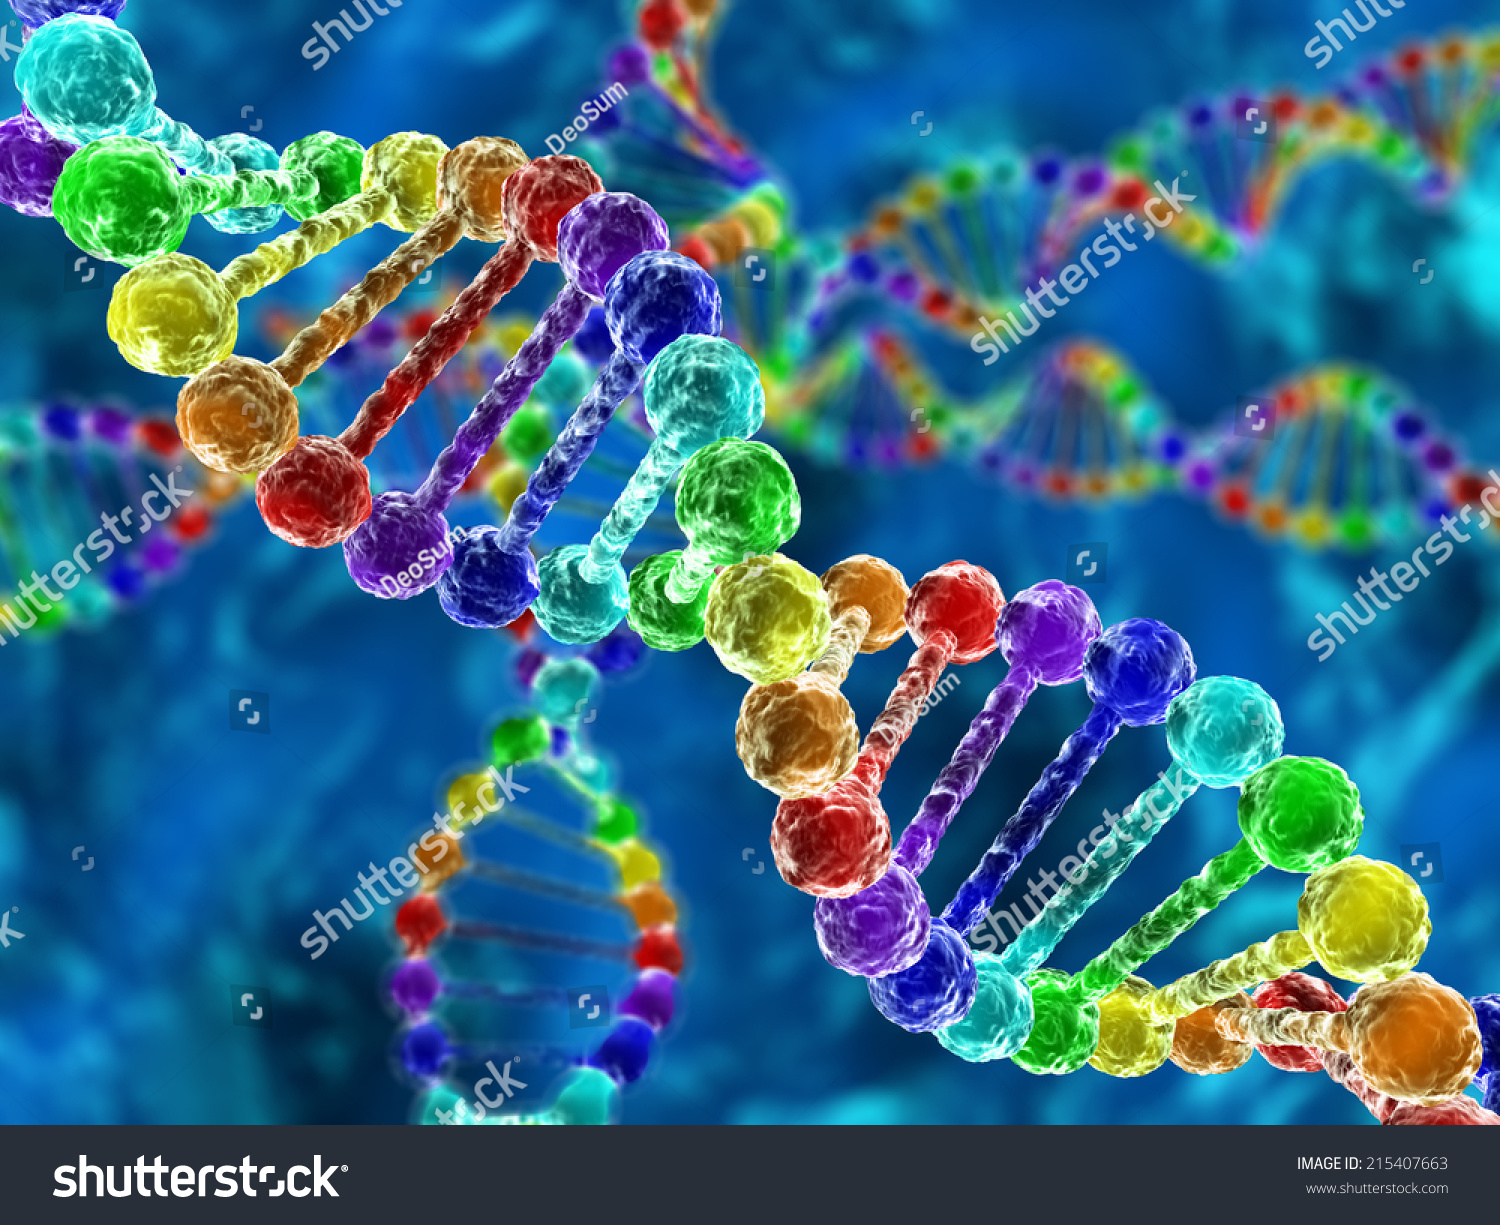 stock-photo-rainbow-dna-deoxyribonucleic-acid-with-defocus-on-background-215407663.jpg